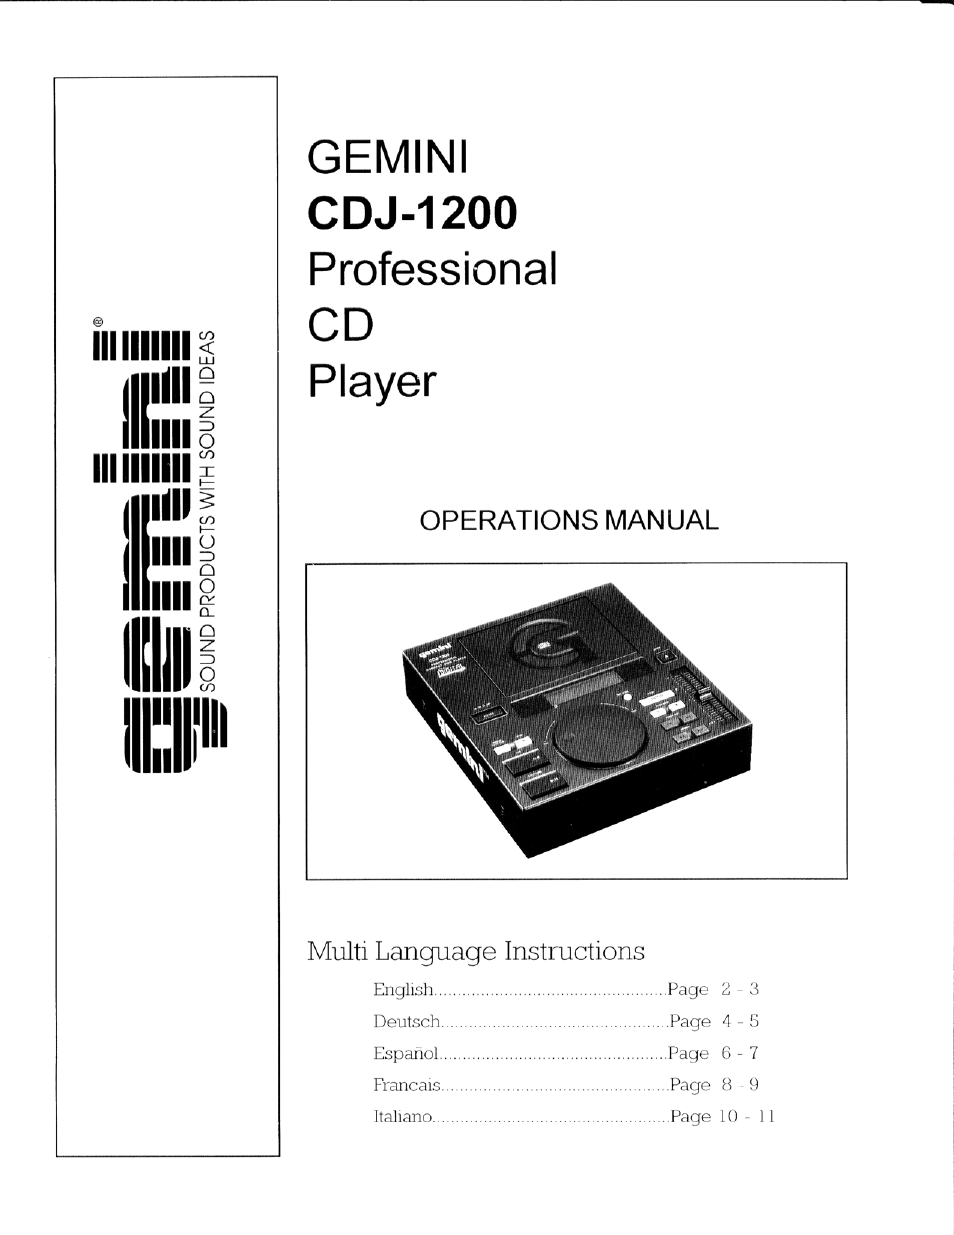 CDJ-1200